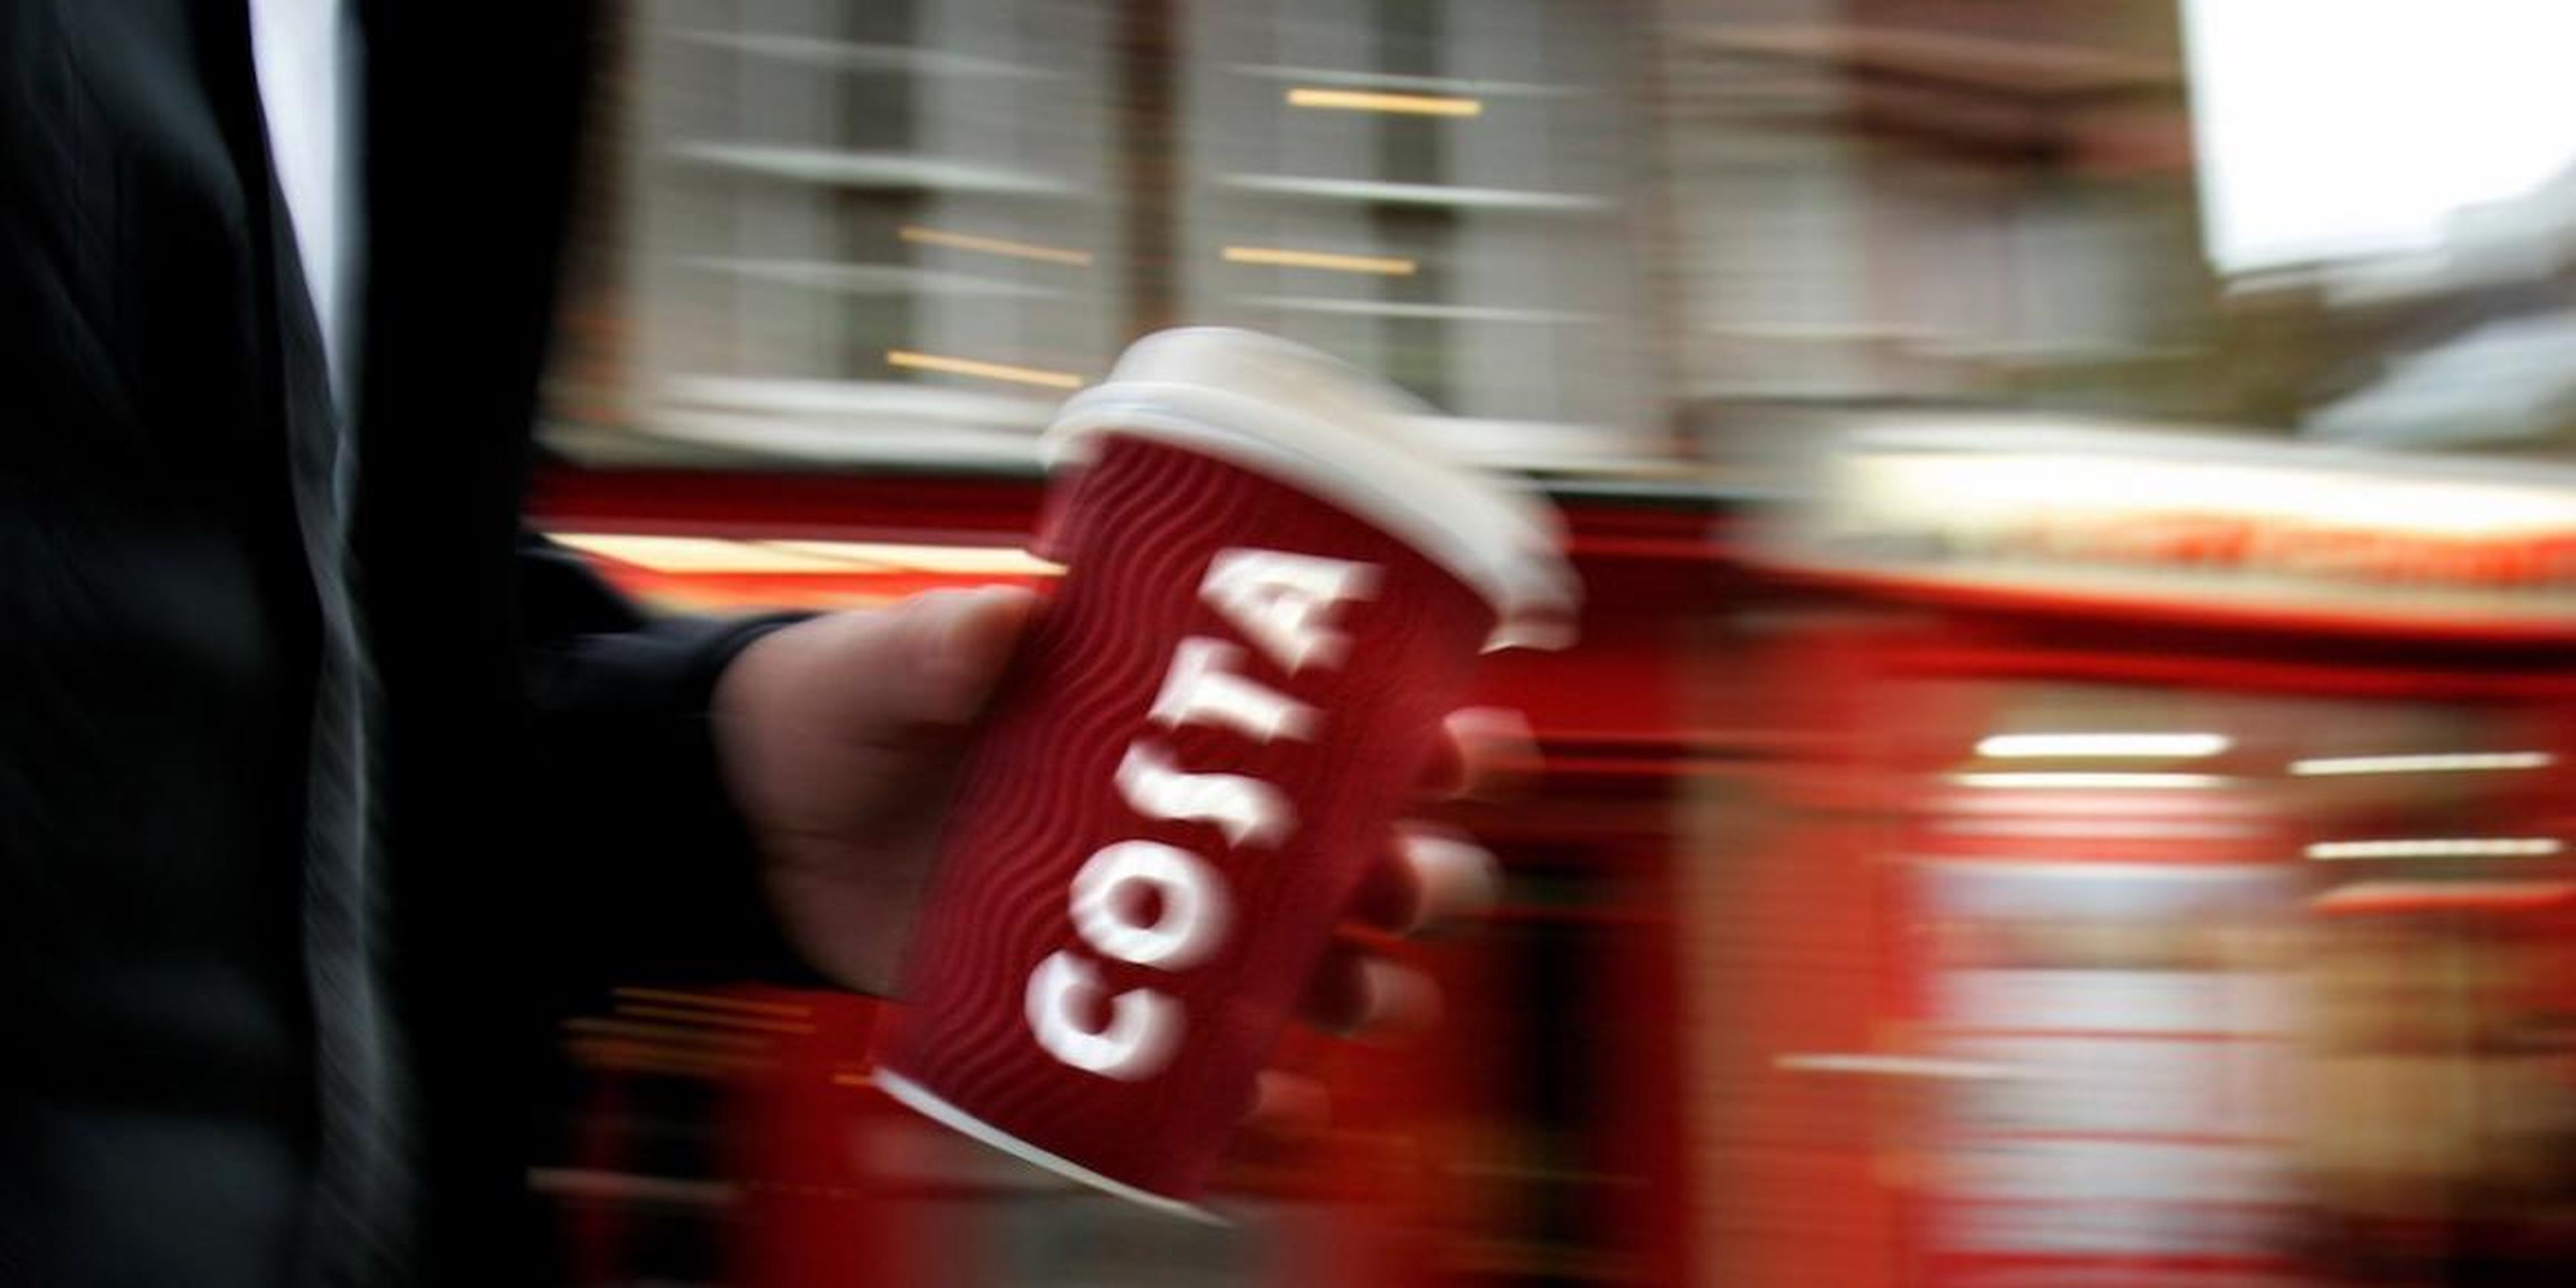 Costa Coffee is Britain's biggest coffee chain.